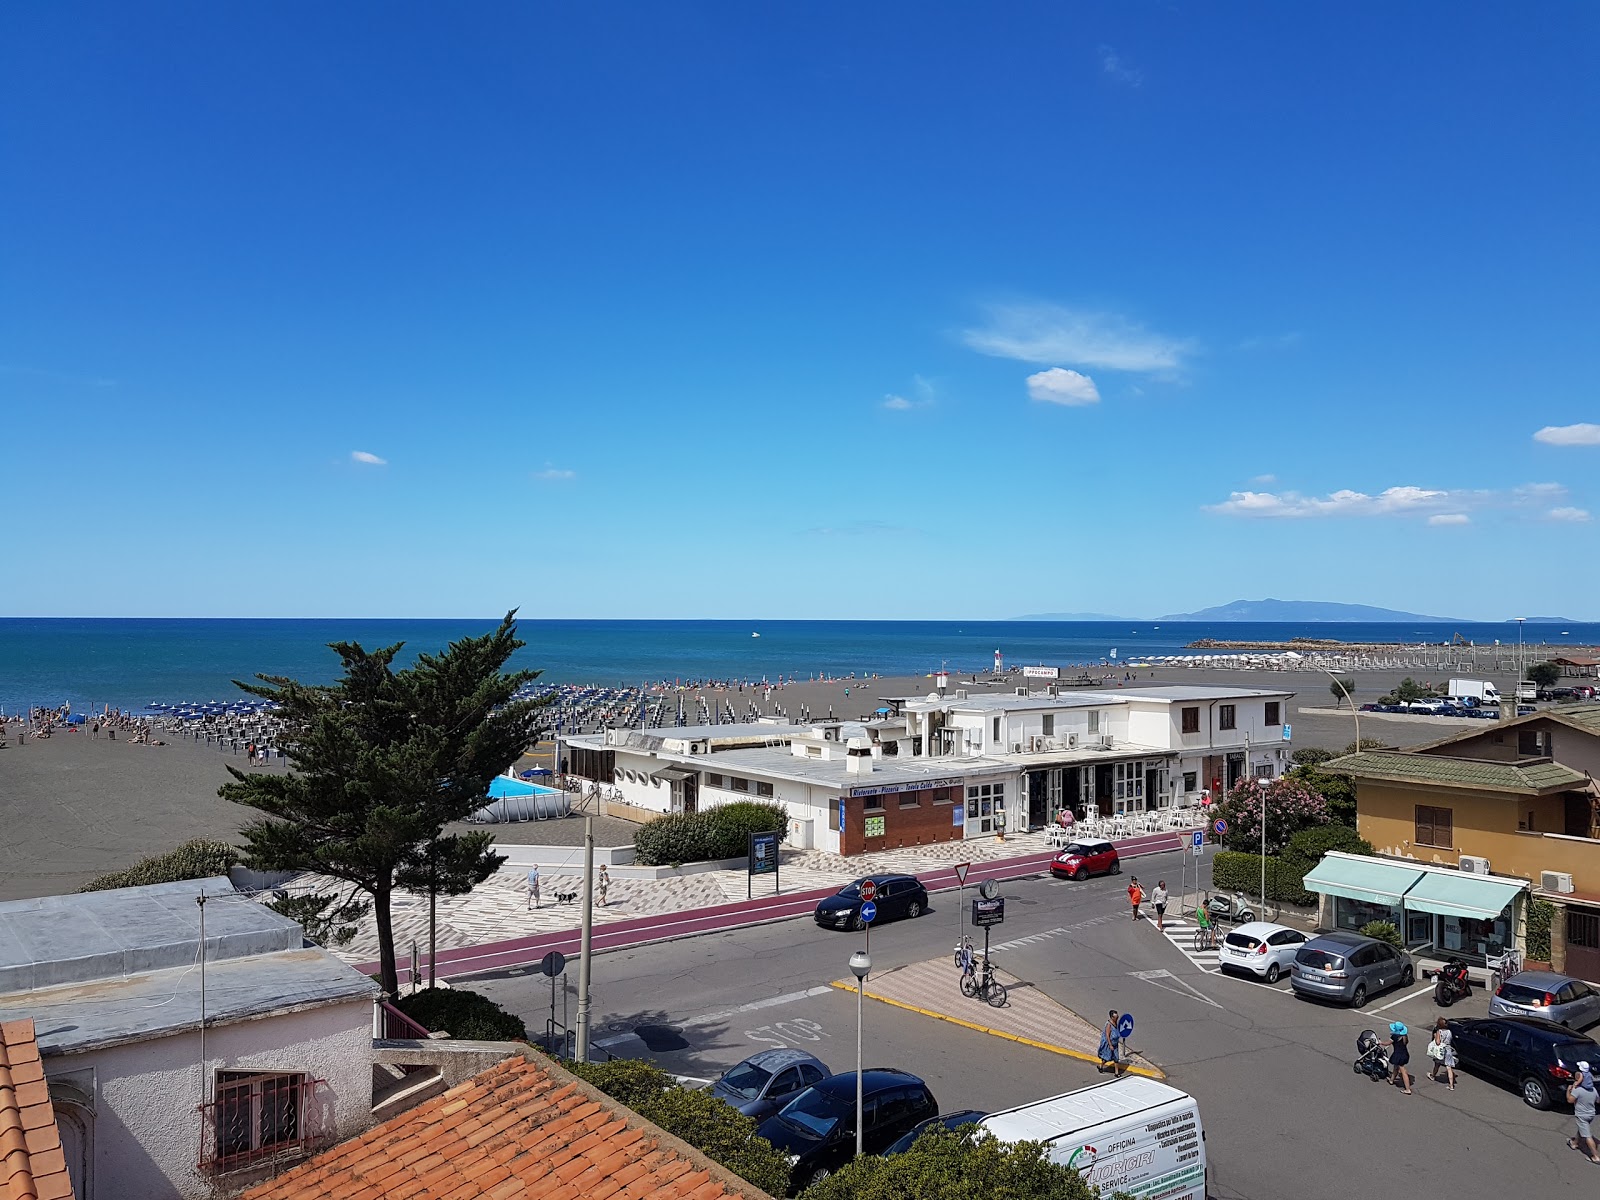 Foto van Spiaggia di Montalto di Castro met blauw water oppervlakte